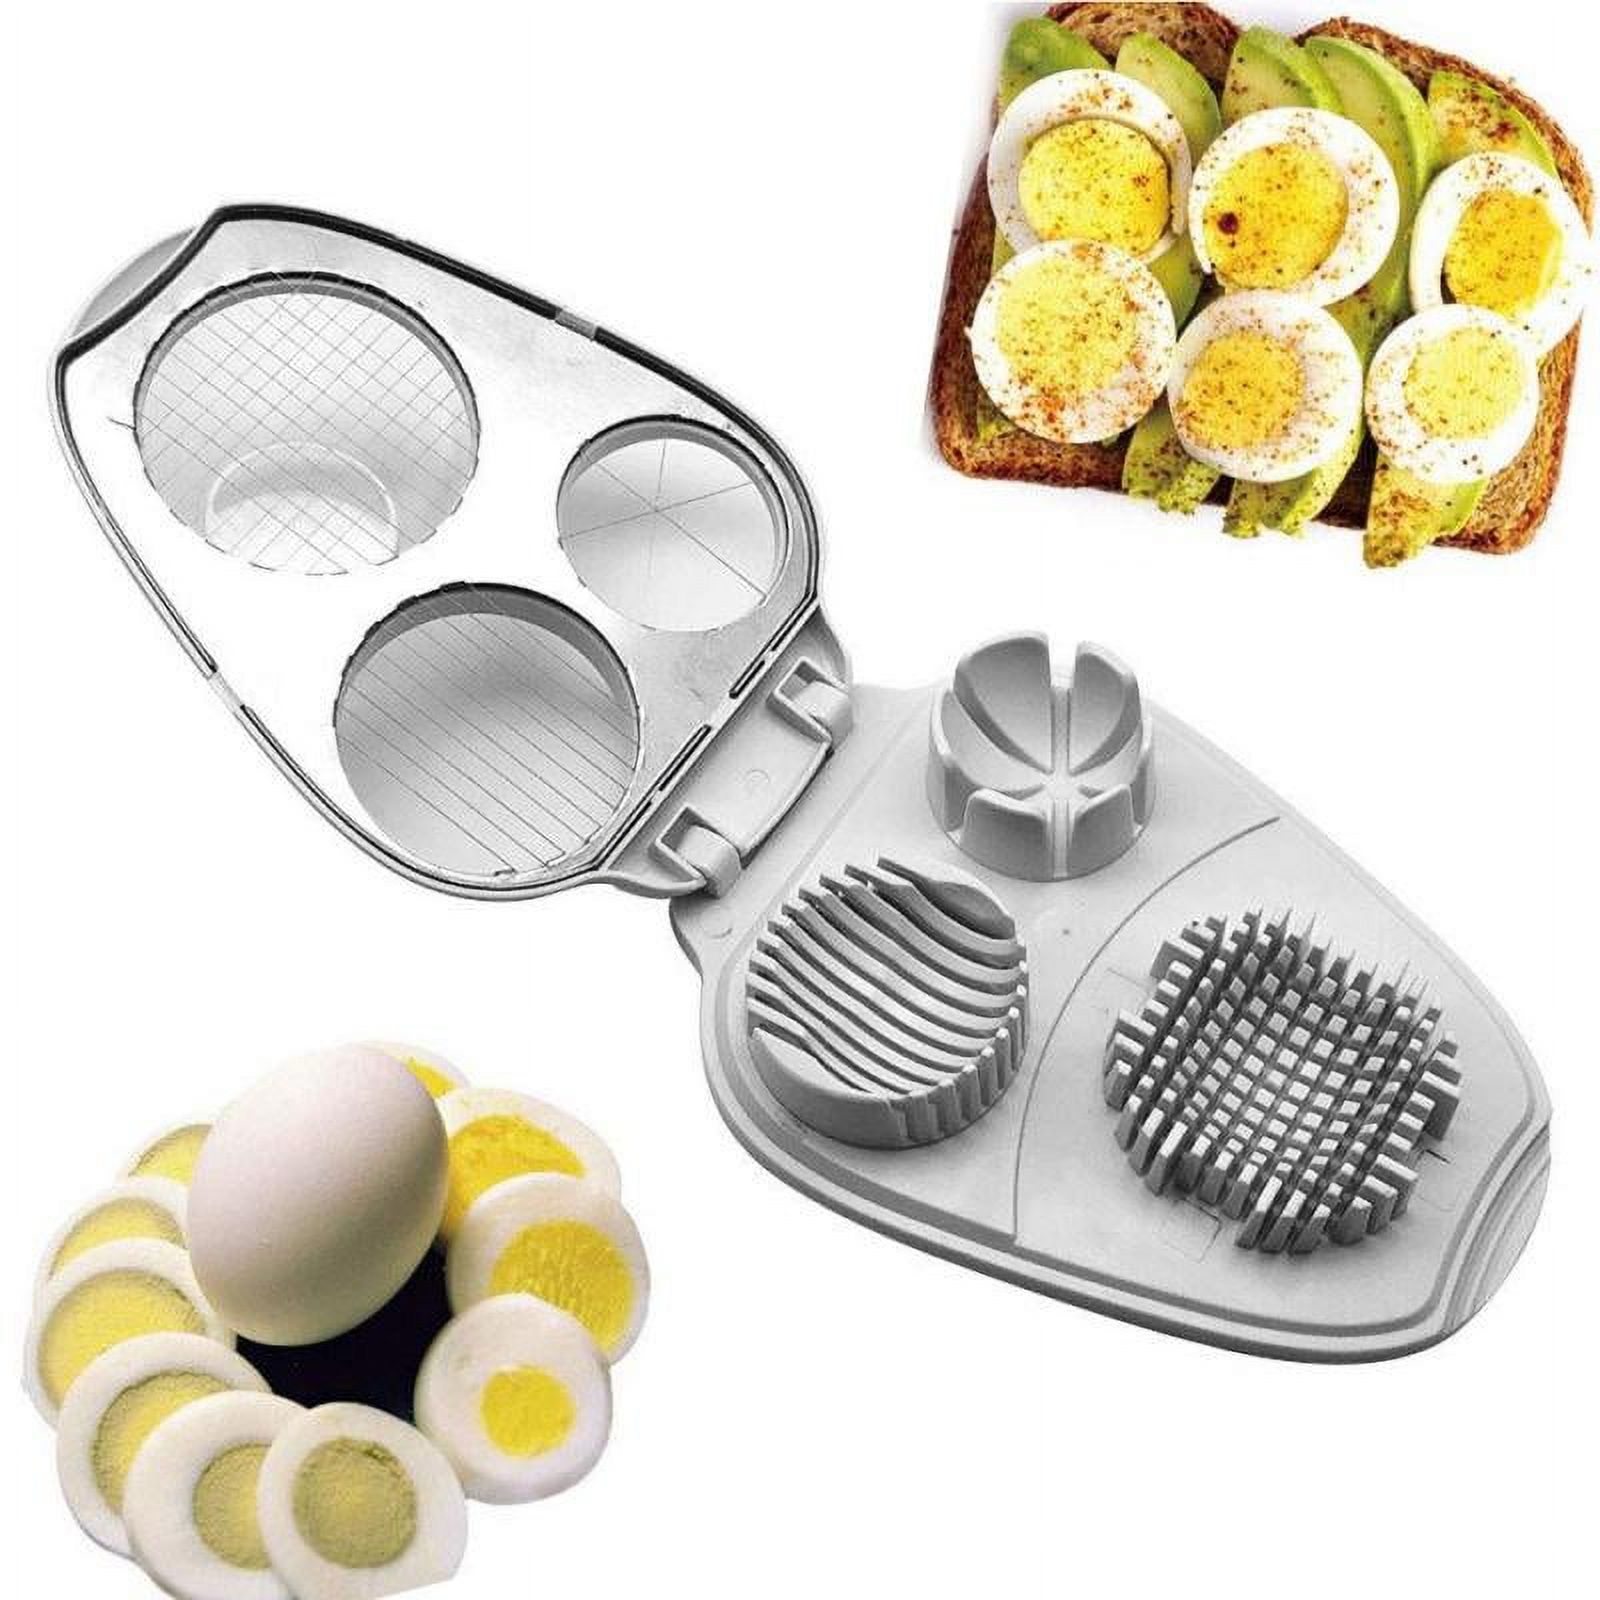 3-in-1 Egg Slicer, Multi-Function Fancy Egg Cutter, Stainless Steel Slicing Egg Slicer Preserved Egg Cutting Device, Egg Crusher - image 1 of 6